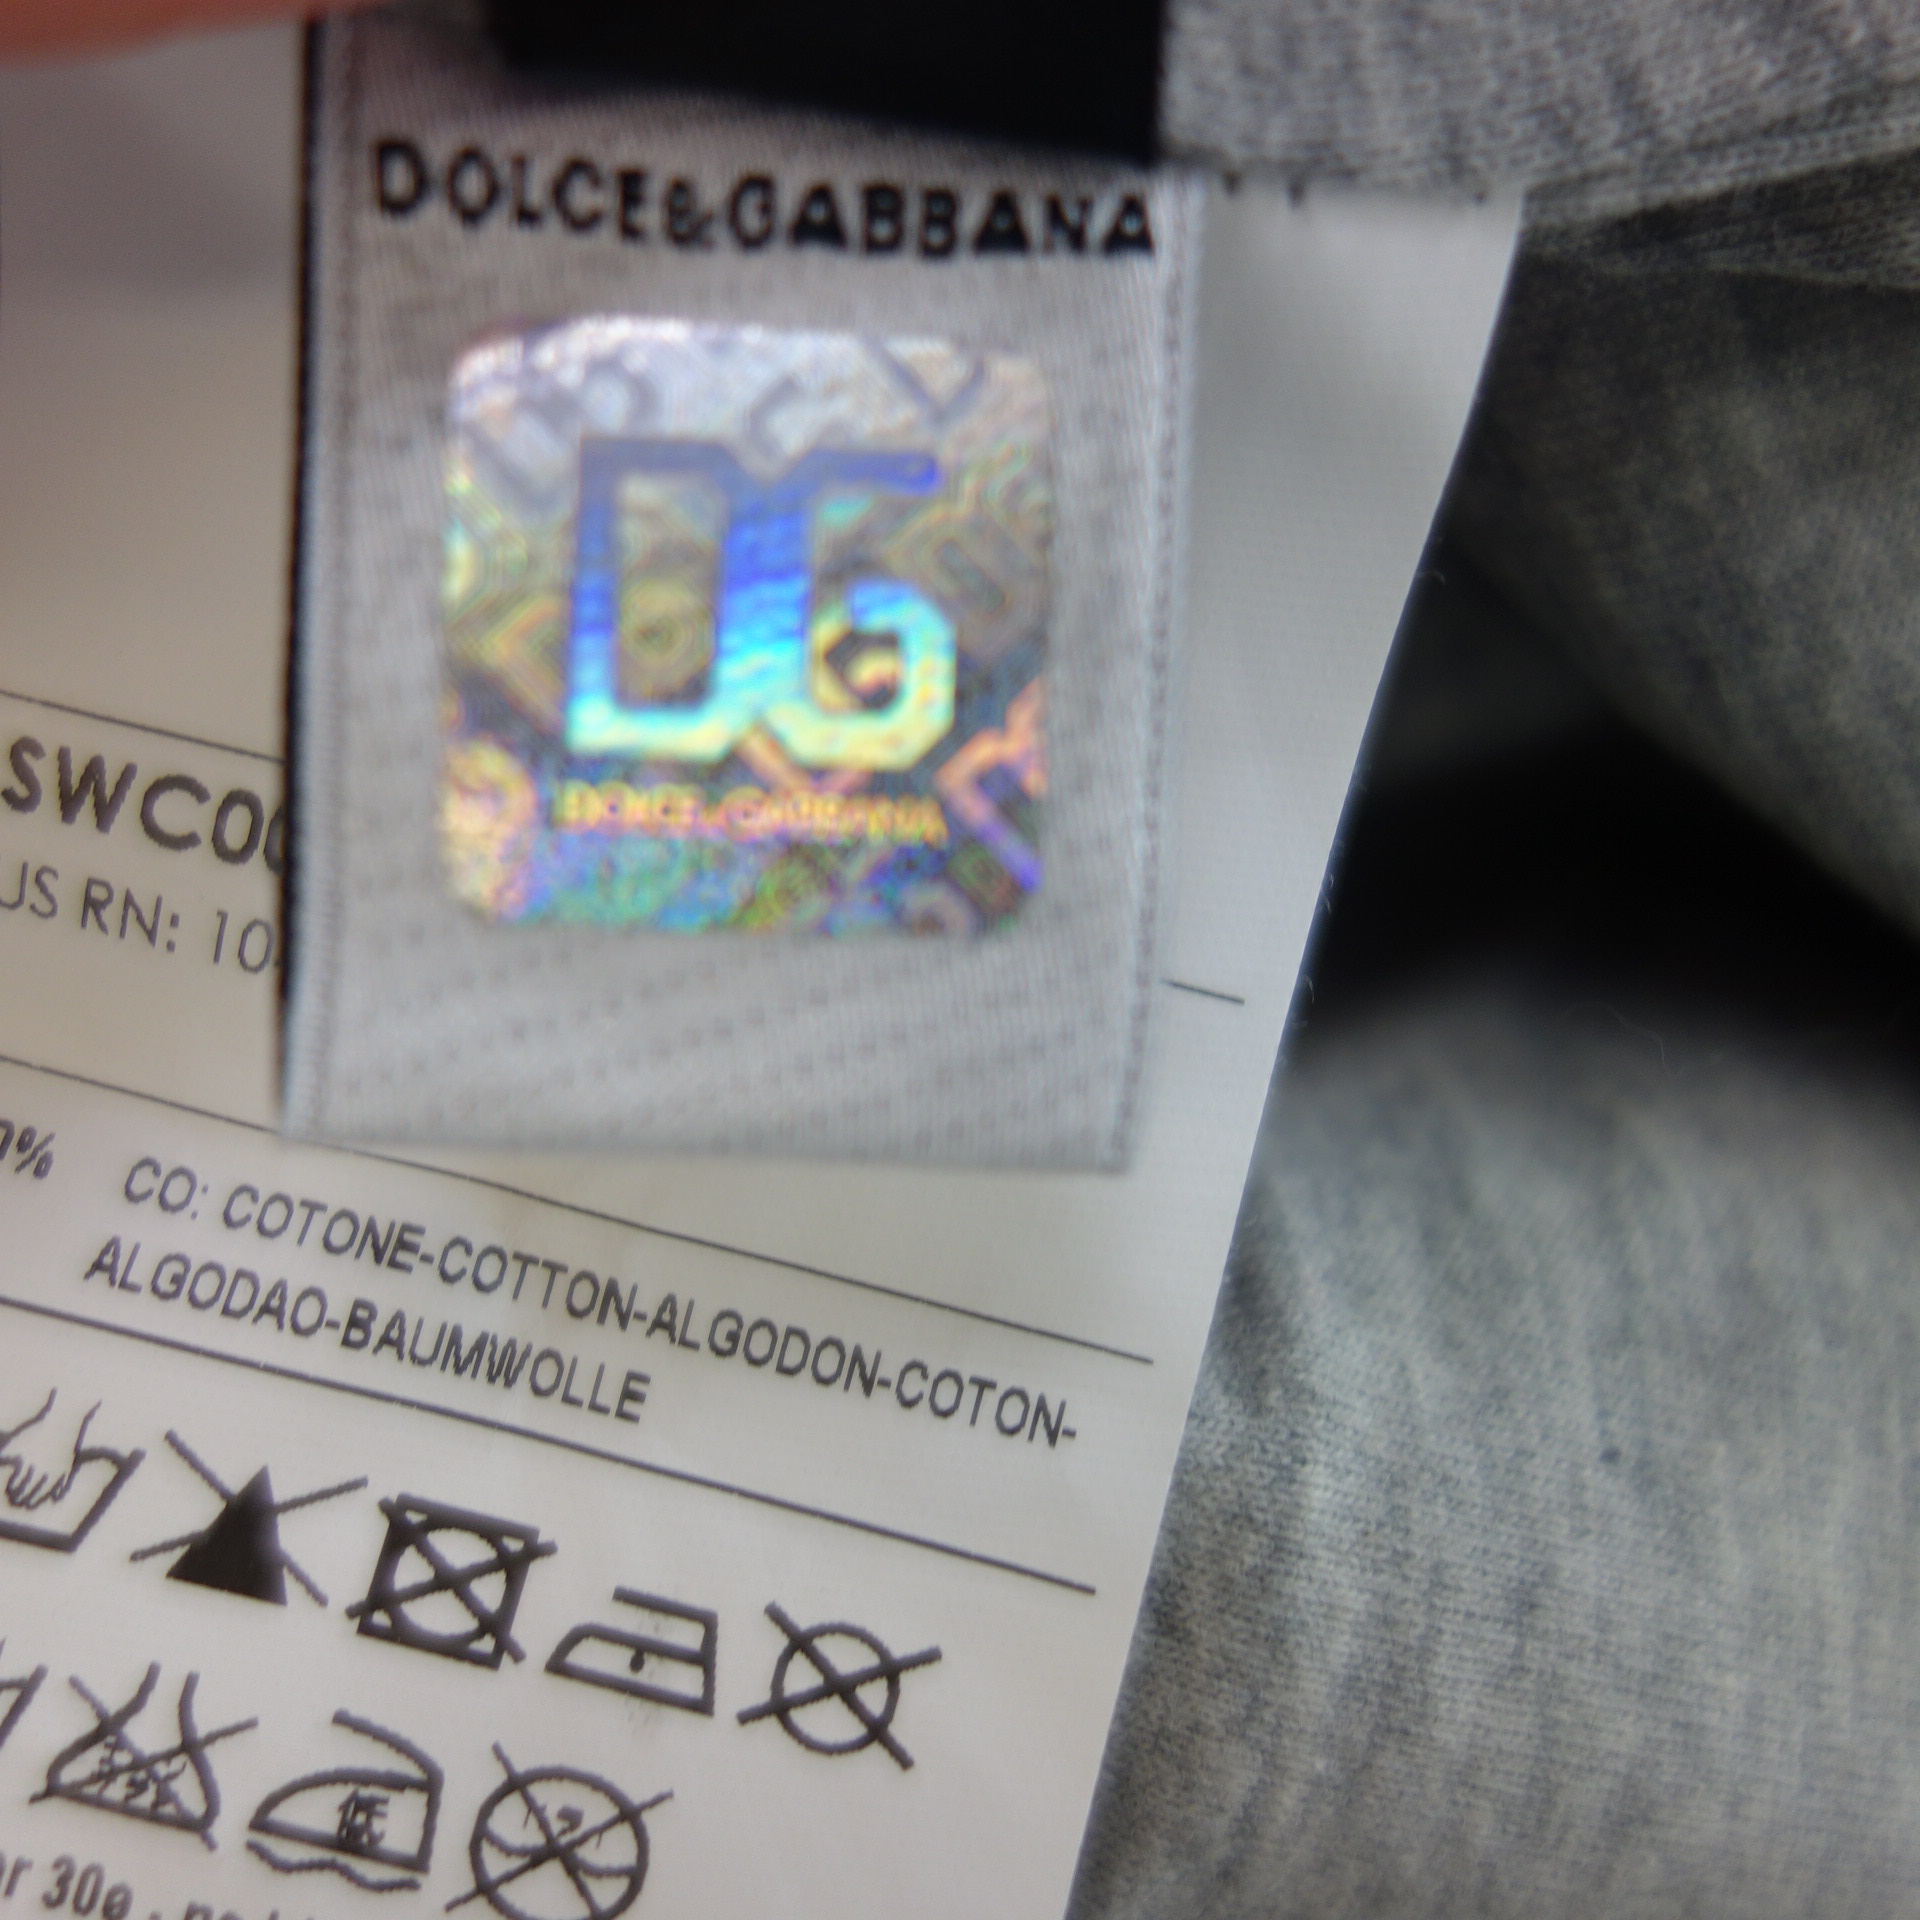 DOLCE & GABBANA D&G Sweater Jacke Grau mit Kapuze 100% Baumwolle